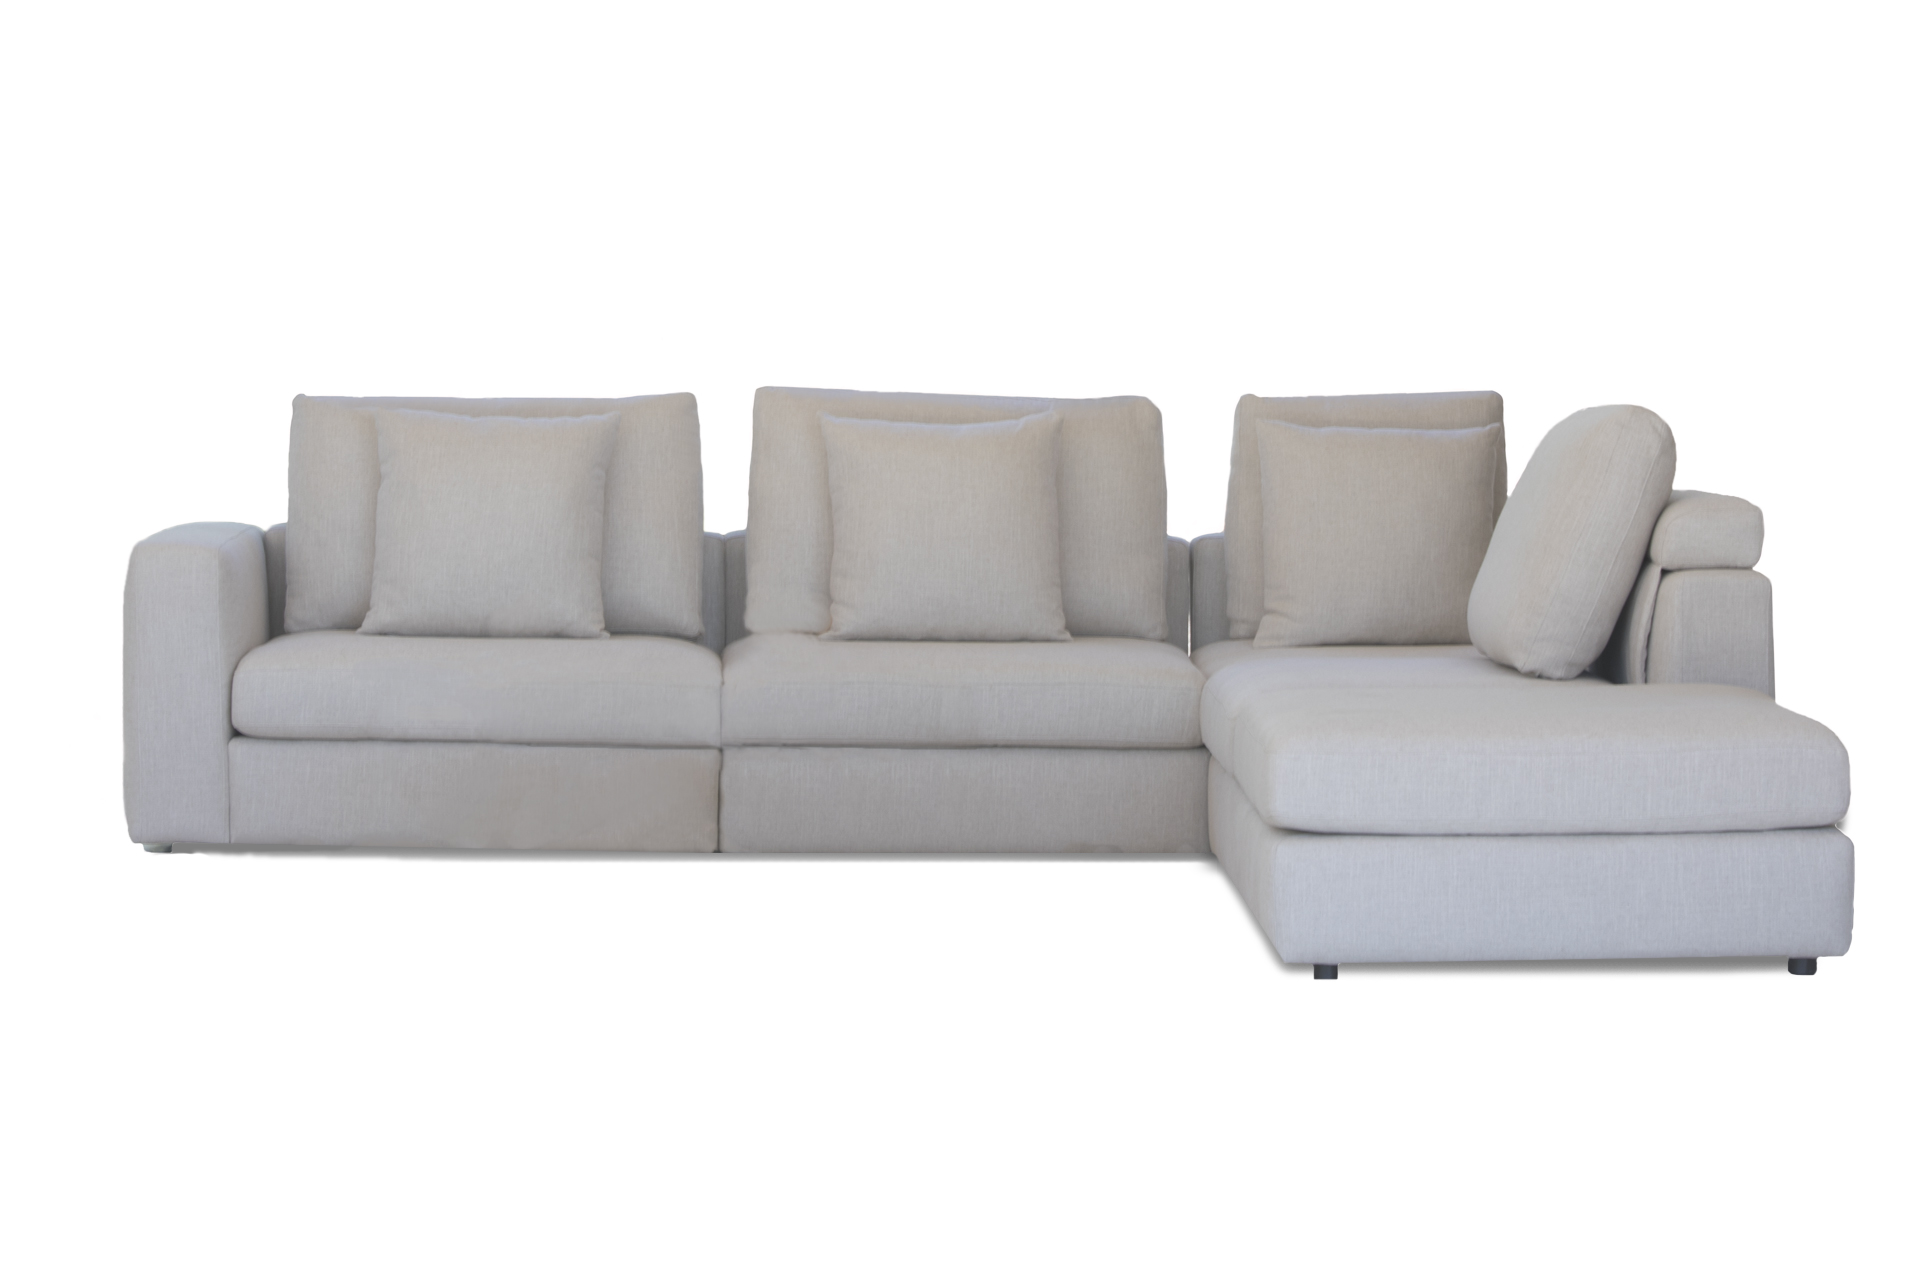 Lombard Sofa